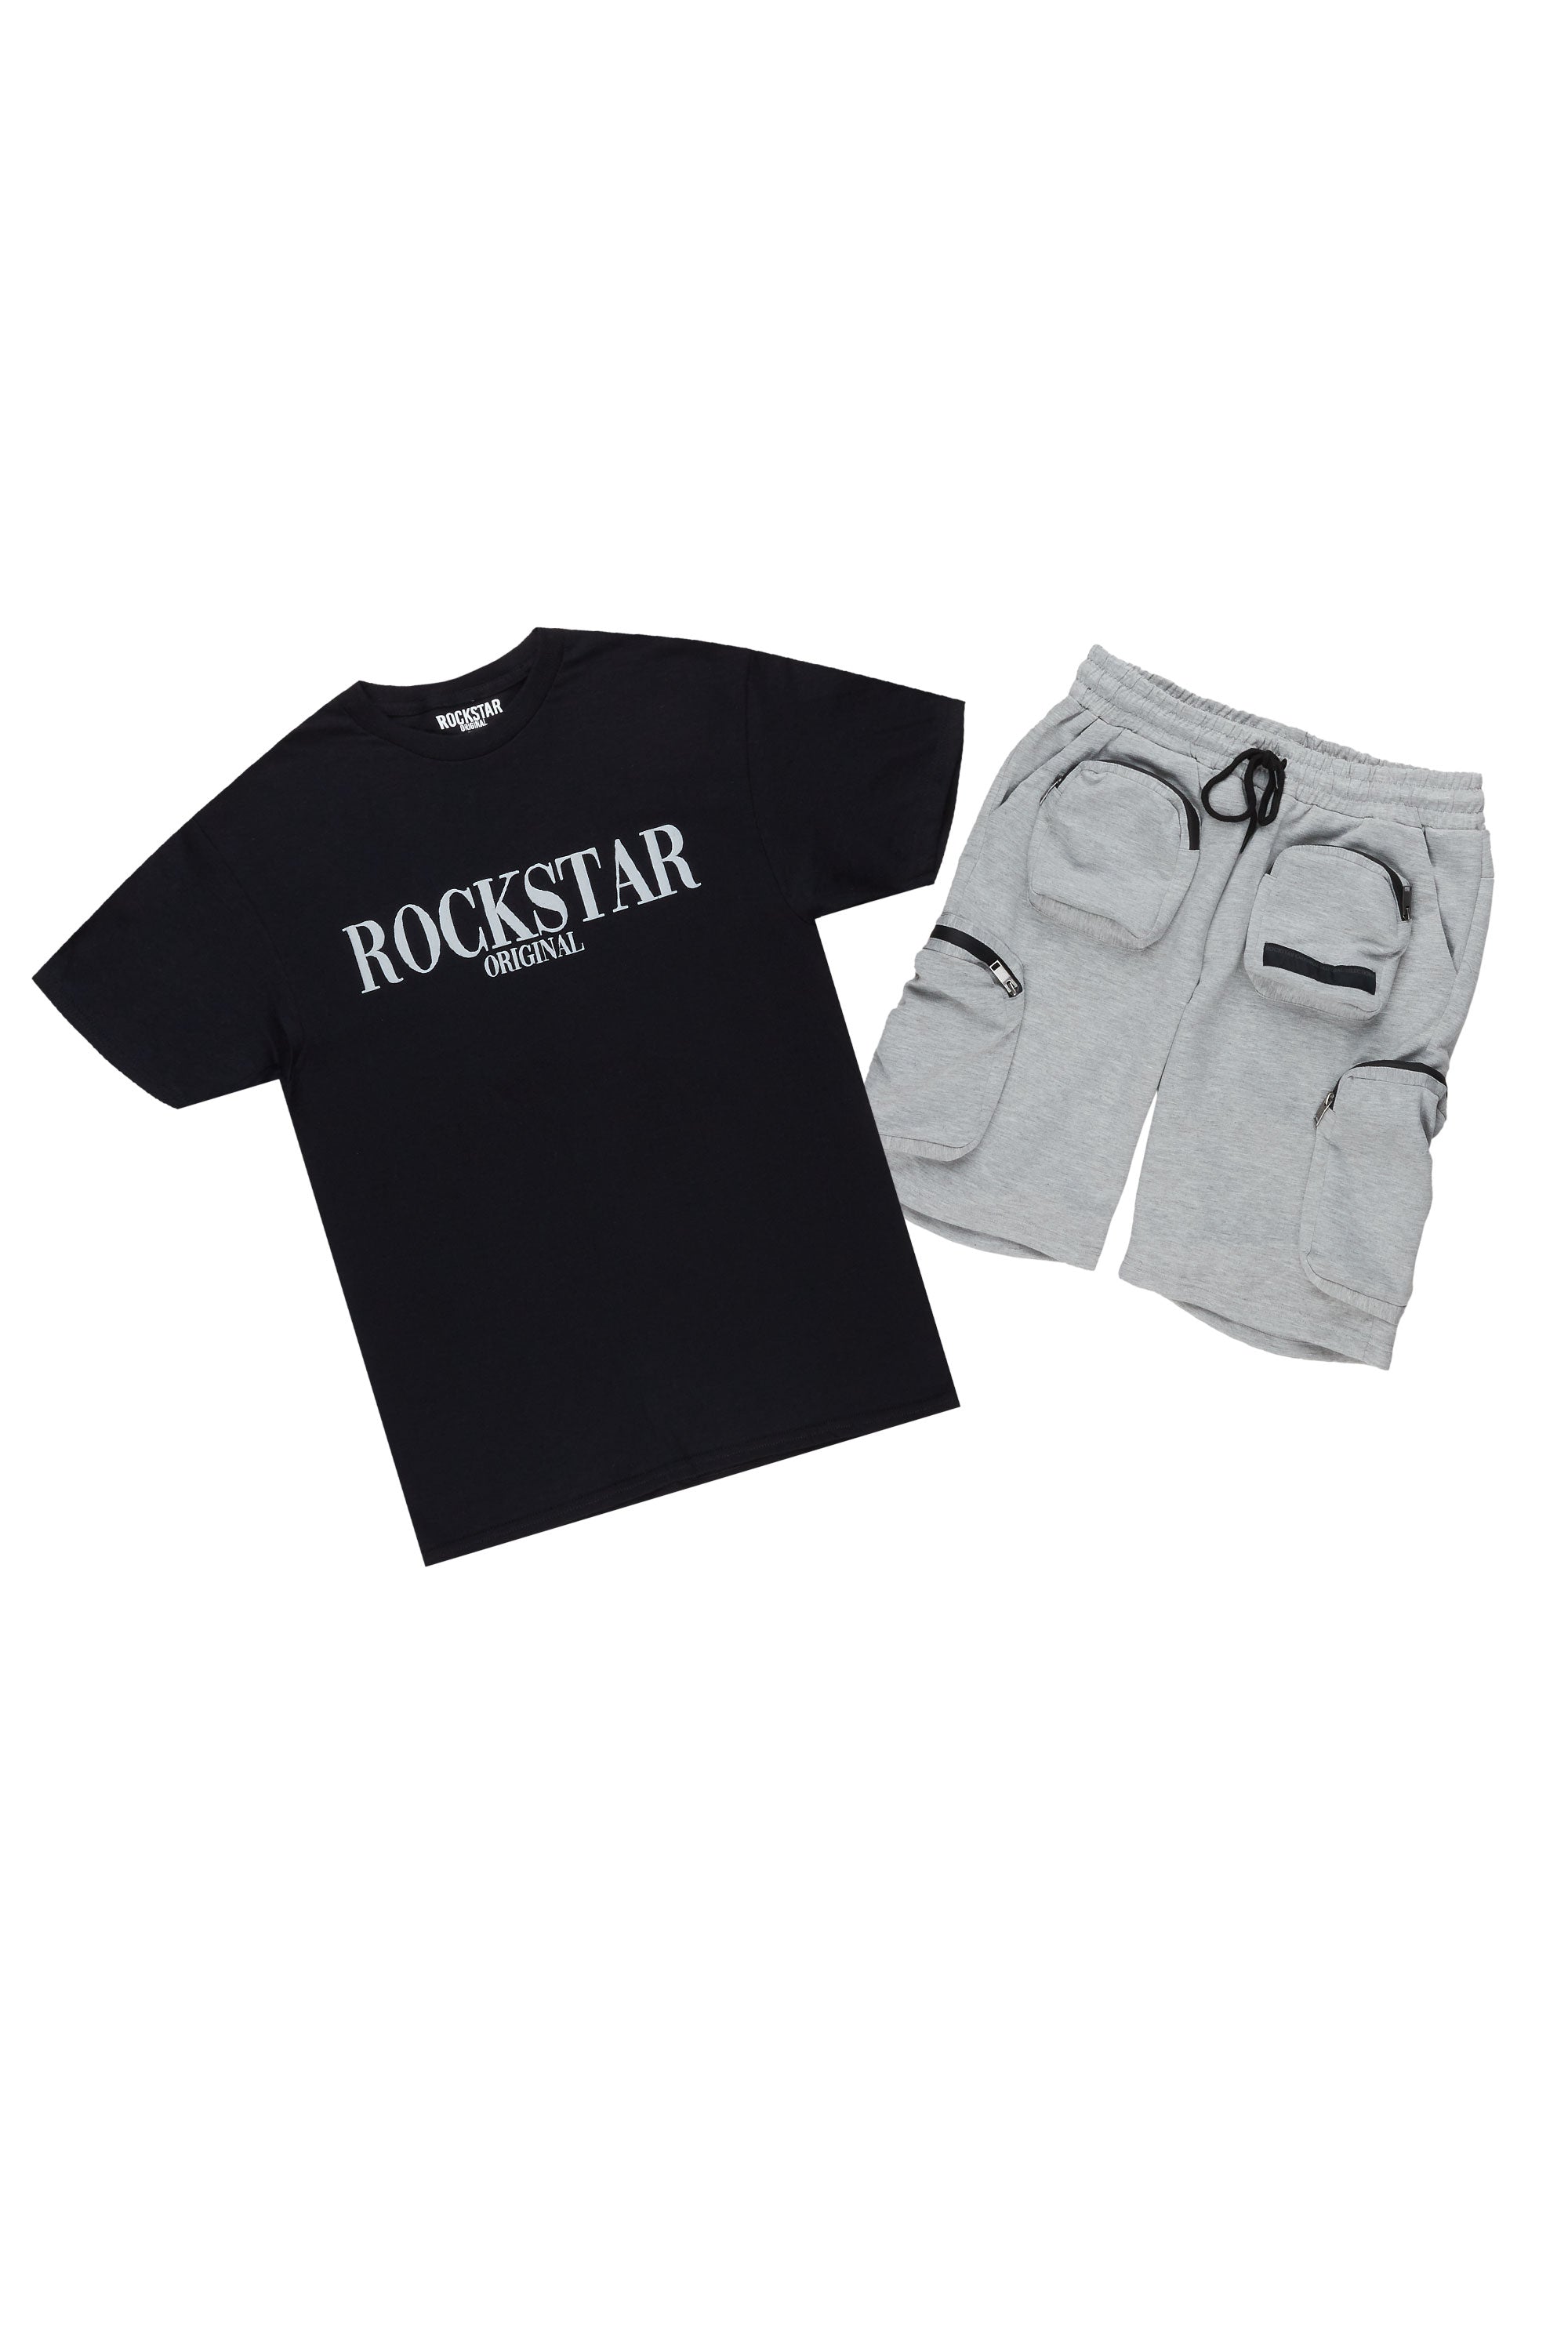 Octavio Black/Grey T-Shirt Cargo Short Set